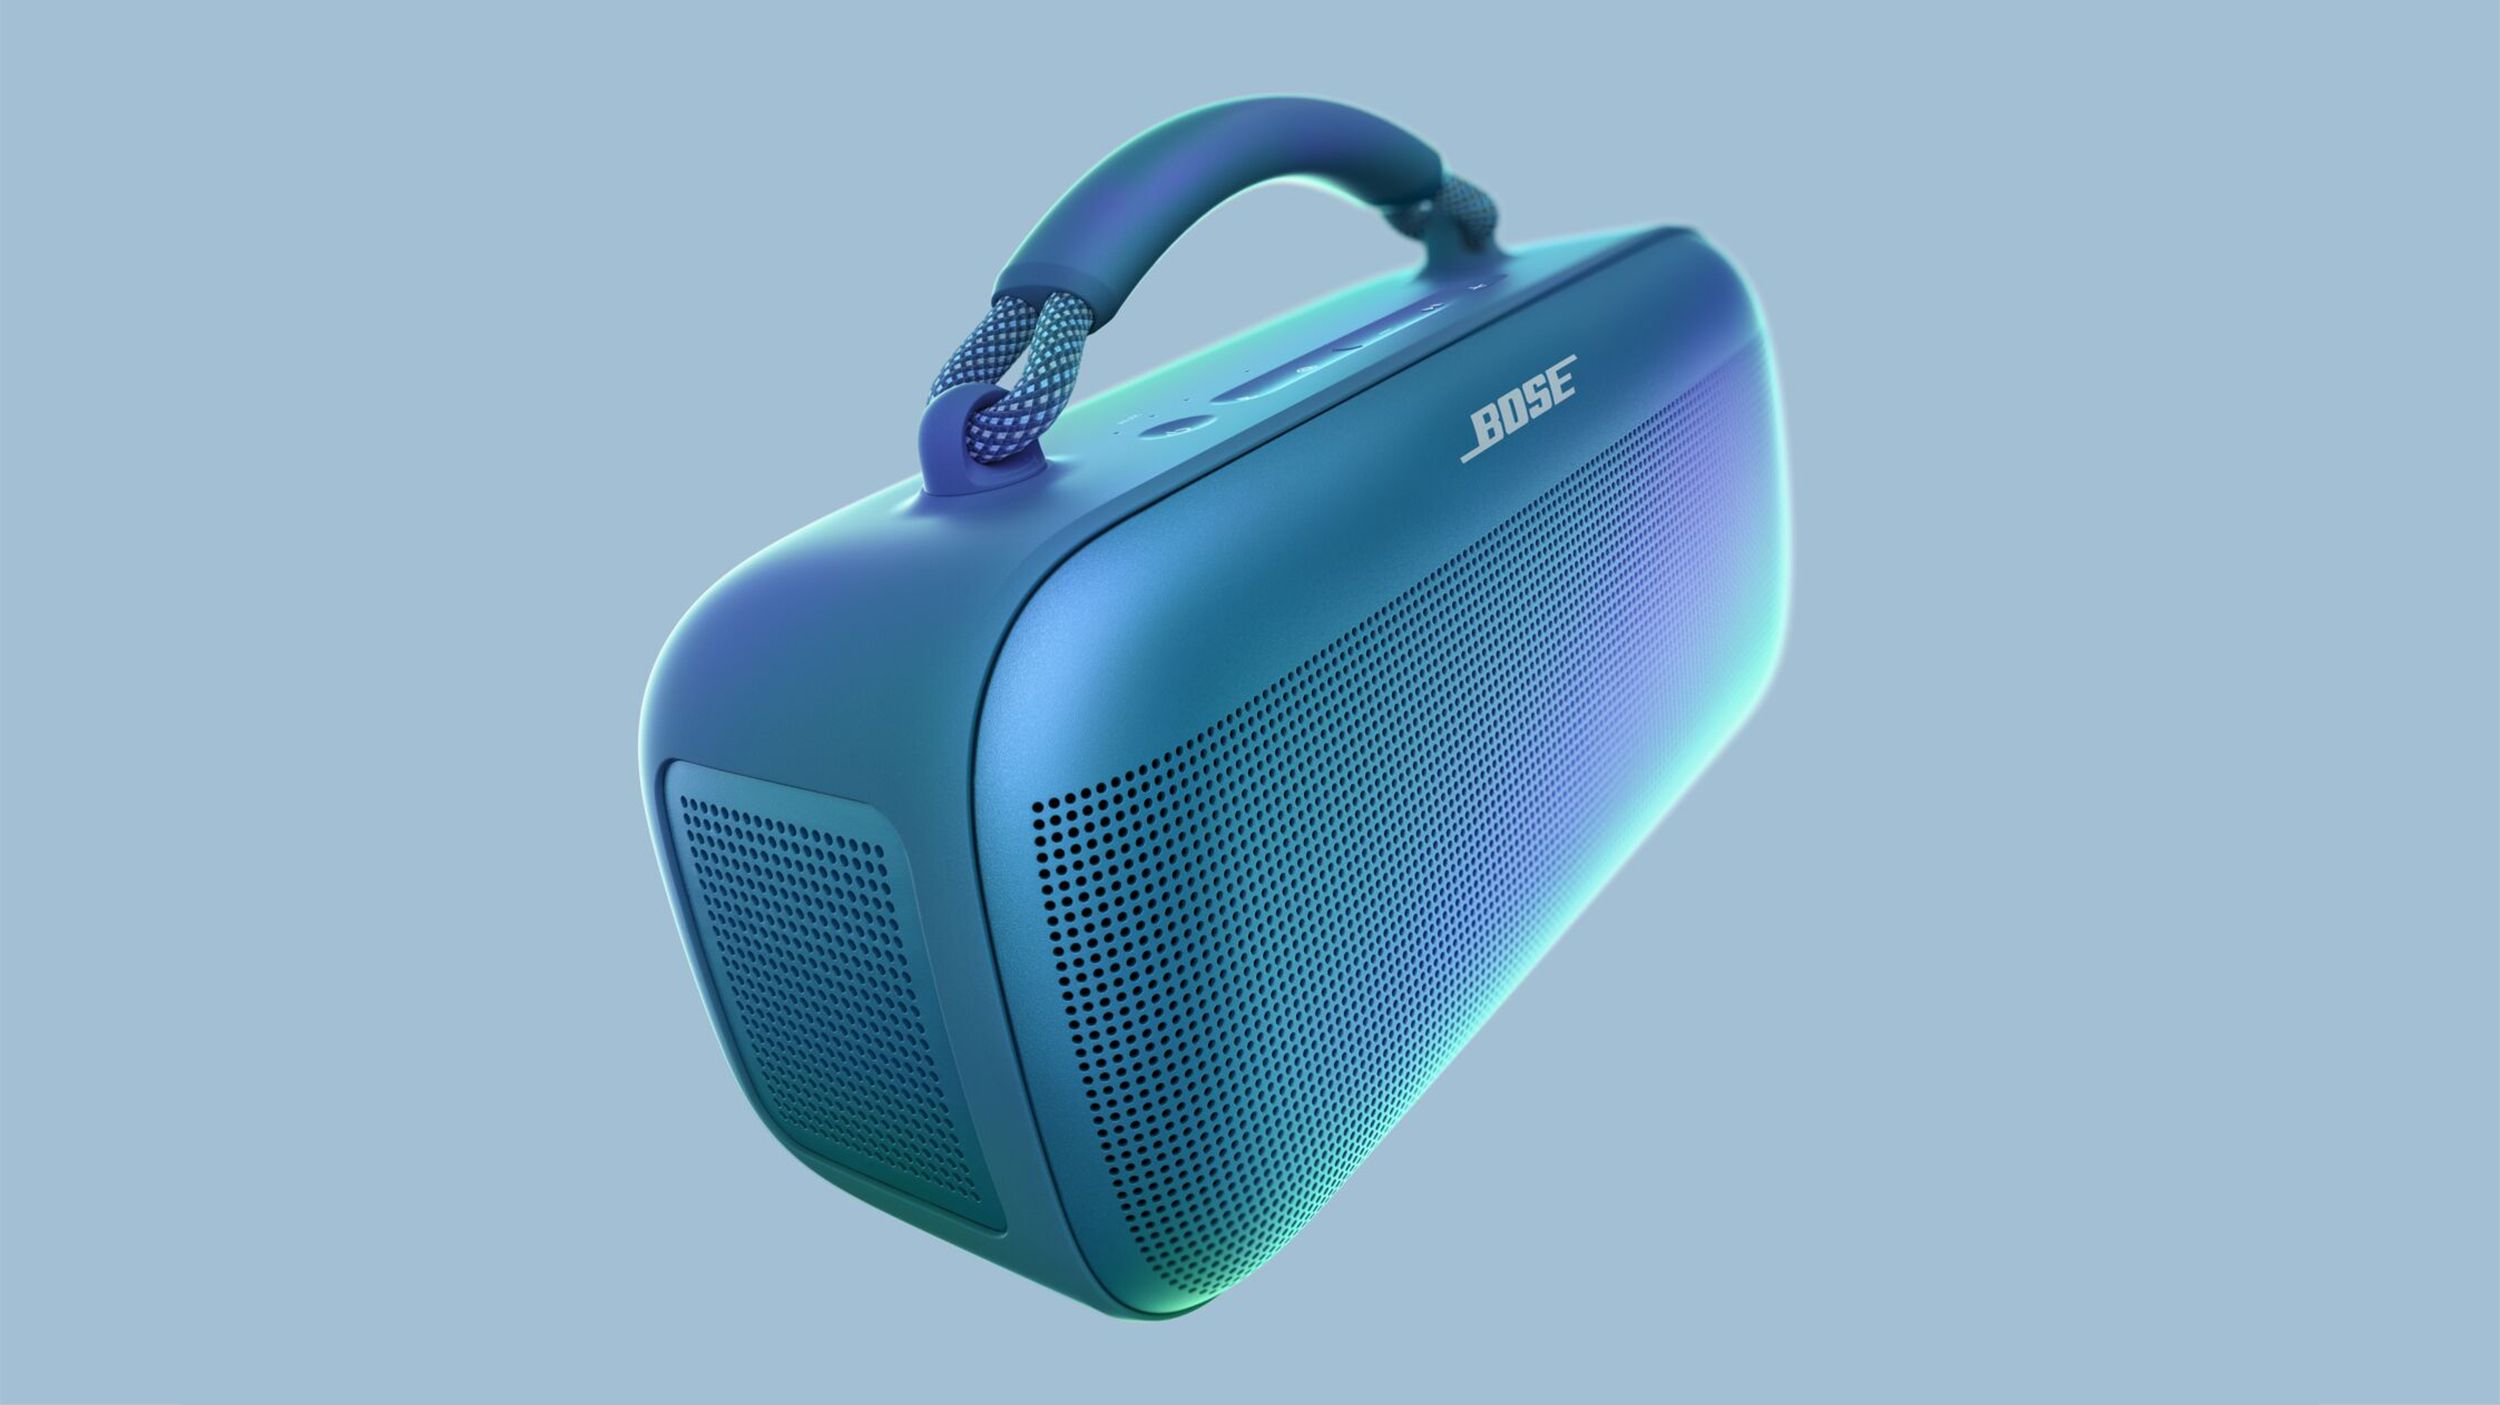 The blue Bose SoundLink Max speaker against a solid baby blue background.